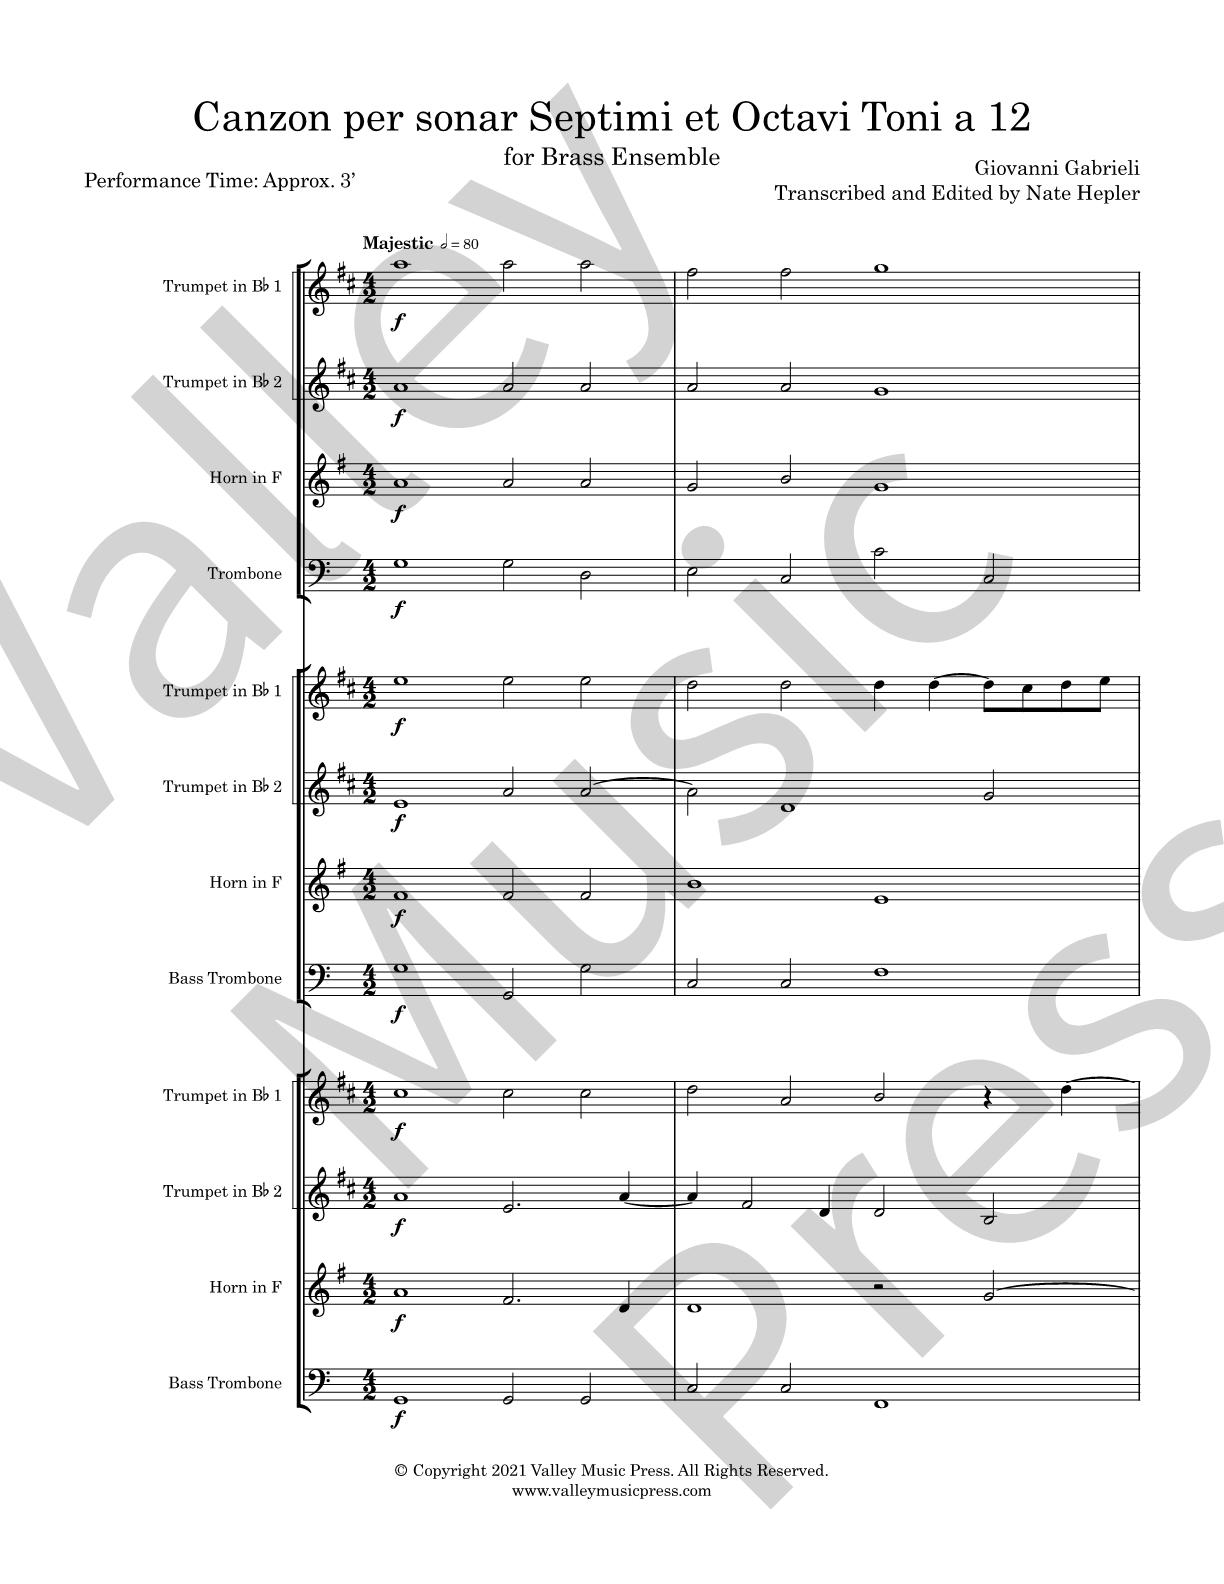 Gabrieli - Canzon Septimi et Octavi Toni a 12 (Brass Ensemble)